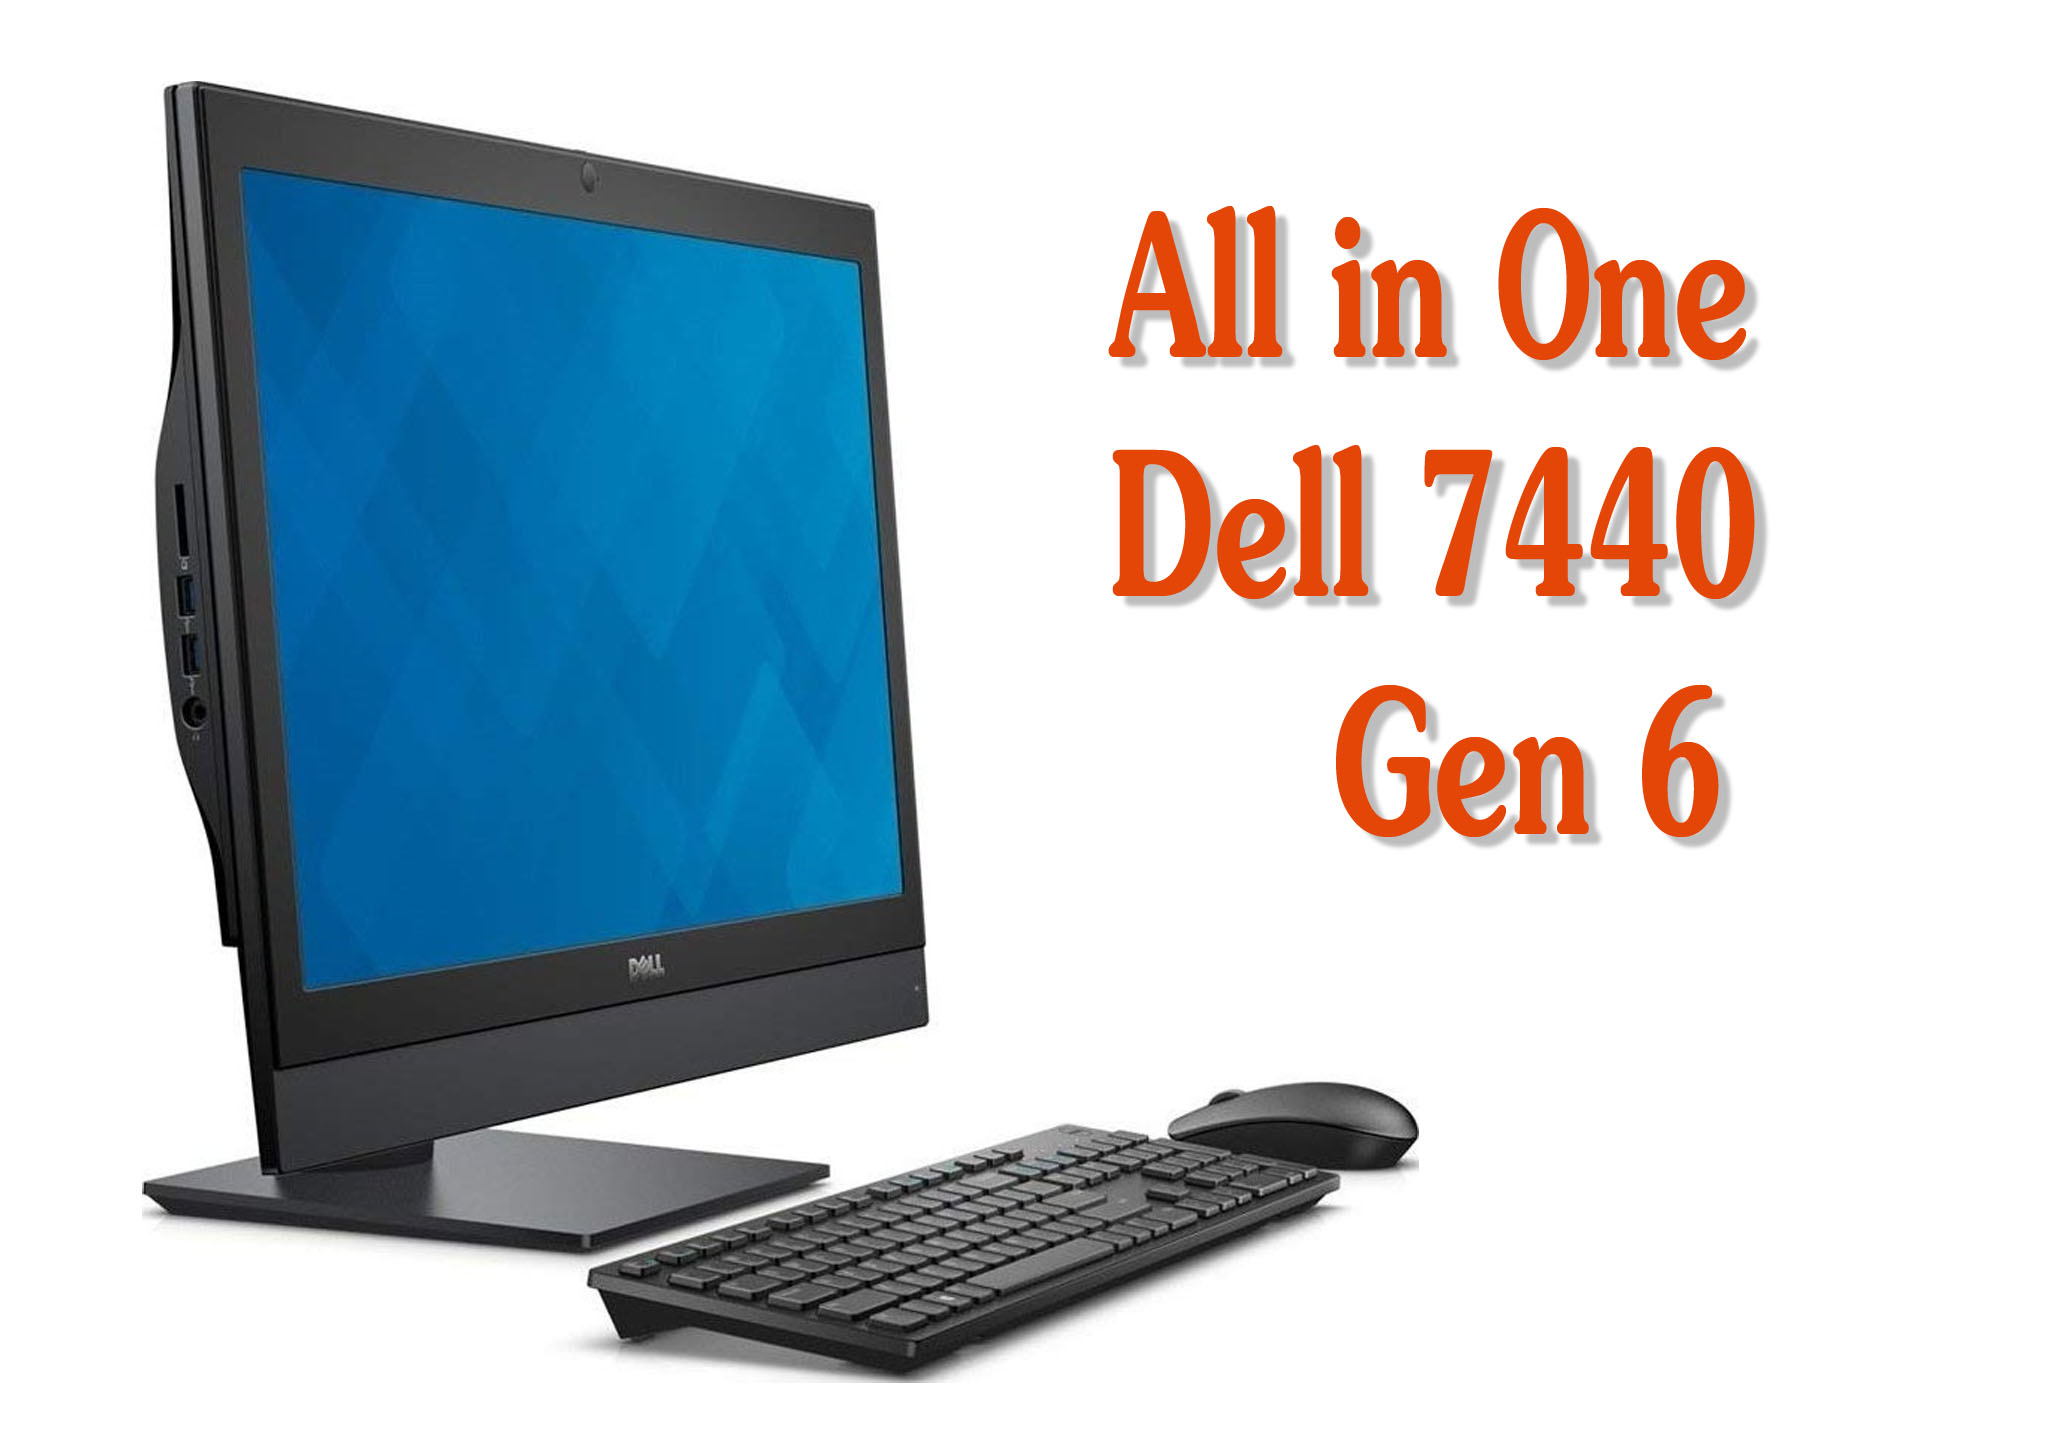 All in One Dell OptiPlex 7440, Core i7 Gen 6, 8GB DD4, SSD M2 128G 24in LED IPS